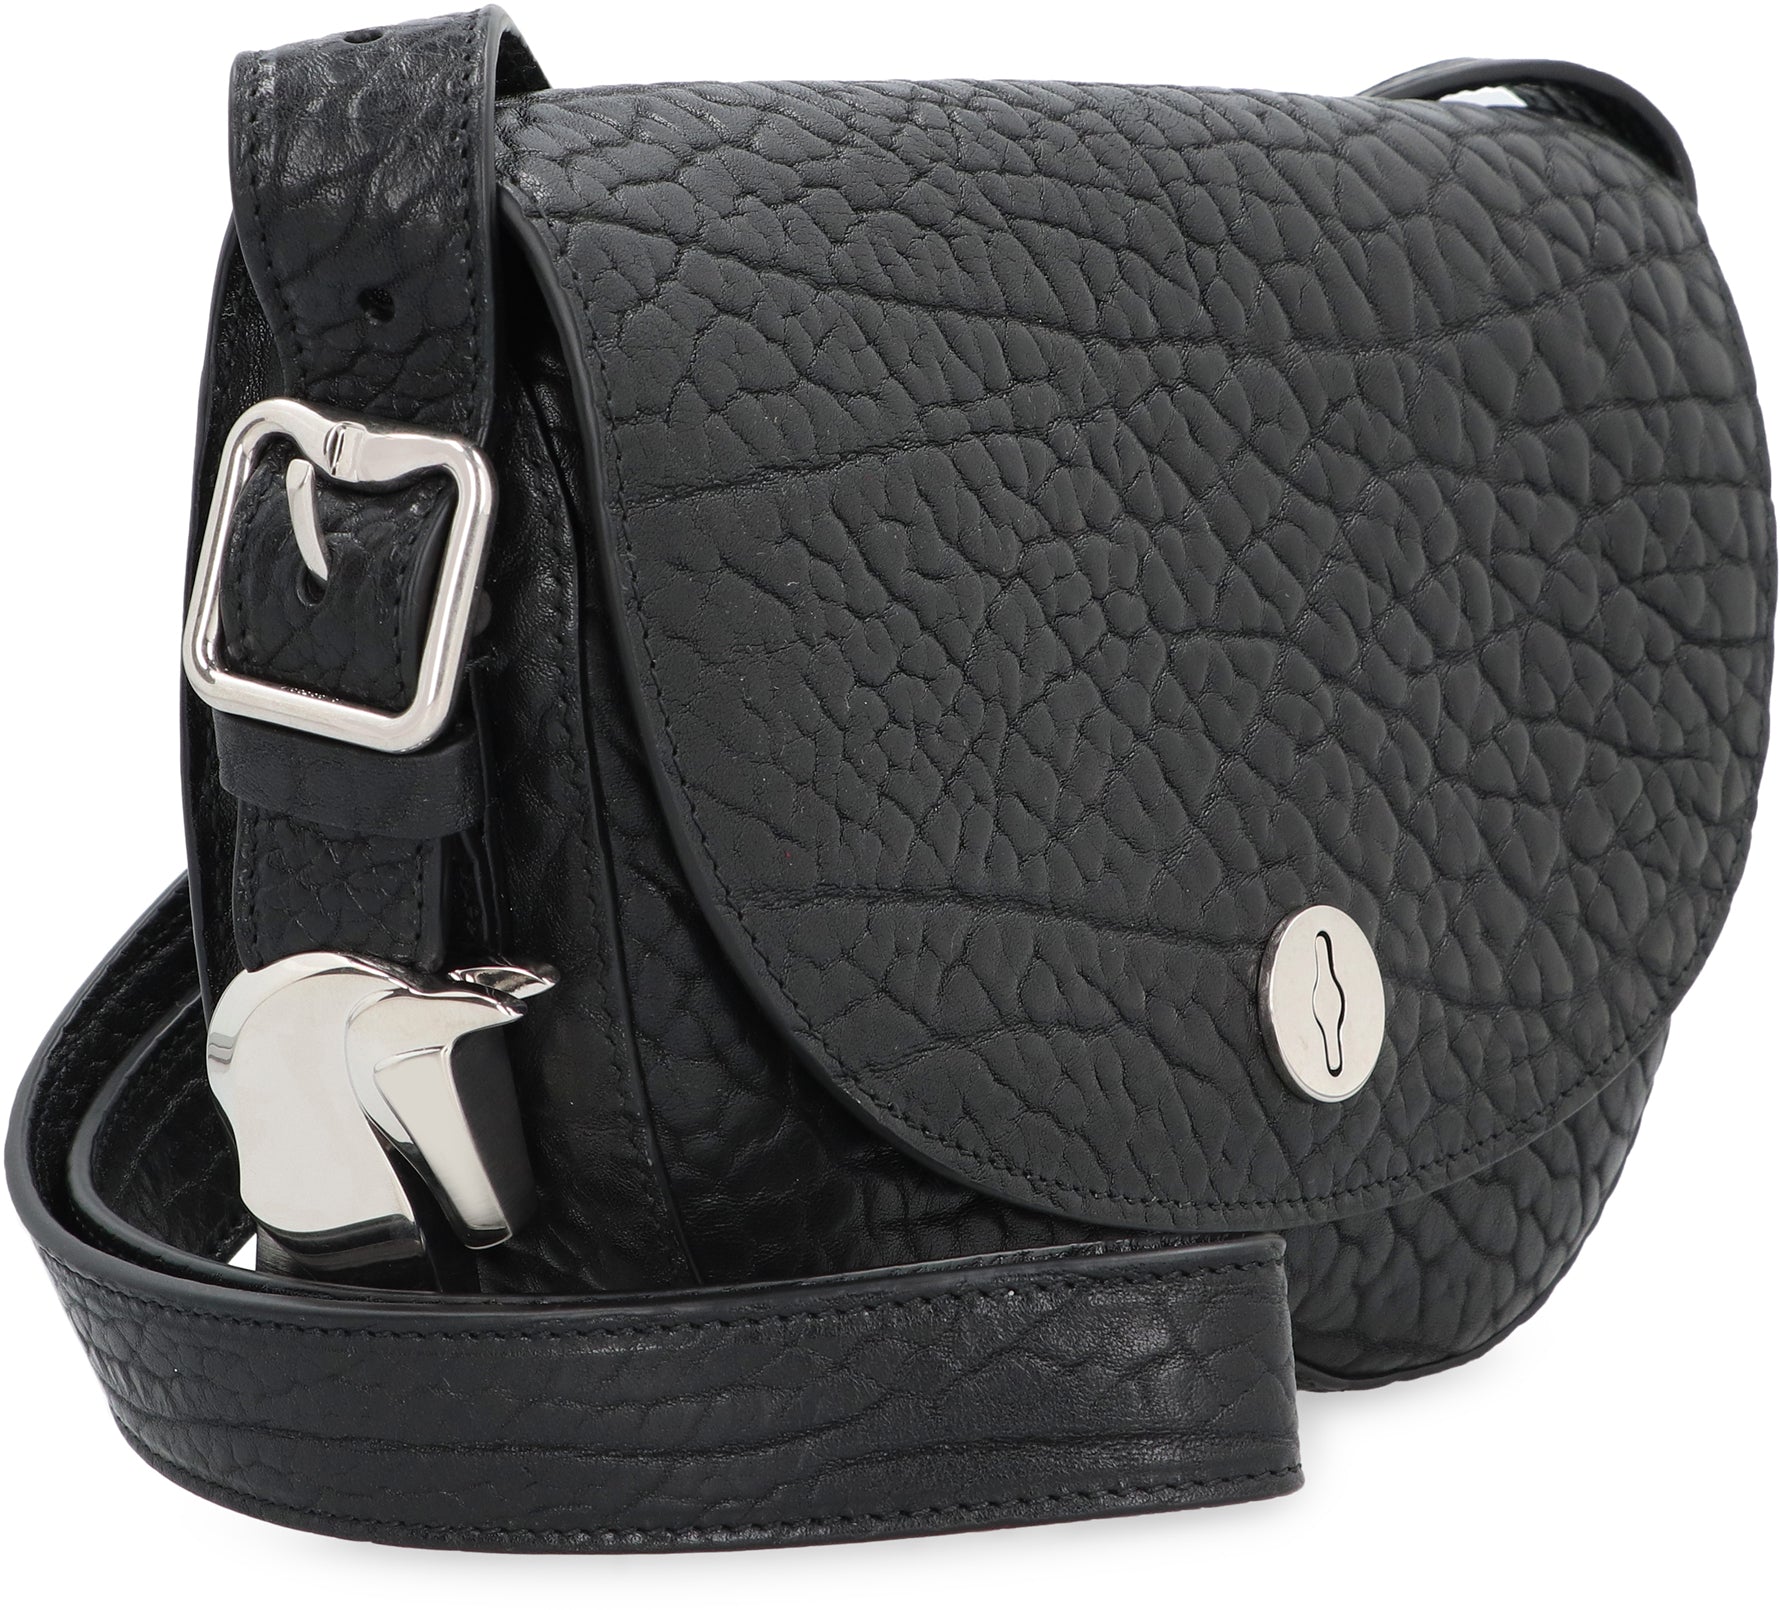 Shop Burberry Luxurious Small Calf Grain Leather Black Satchel Handbag For Women